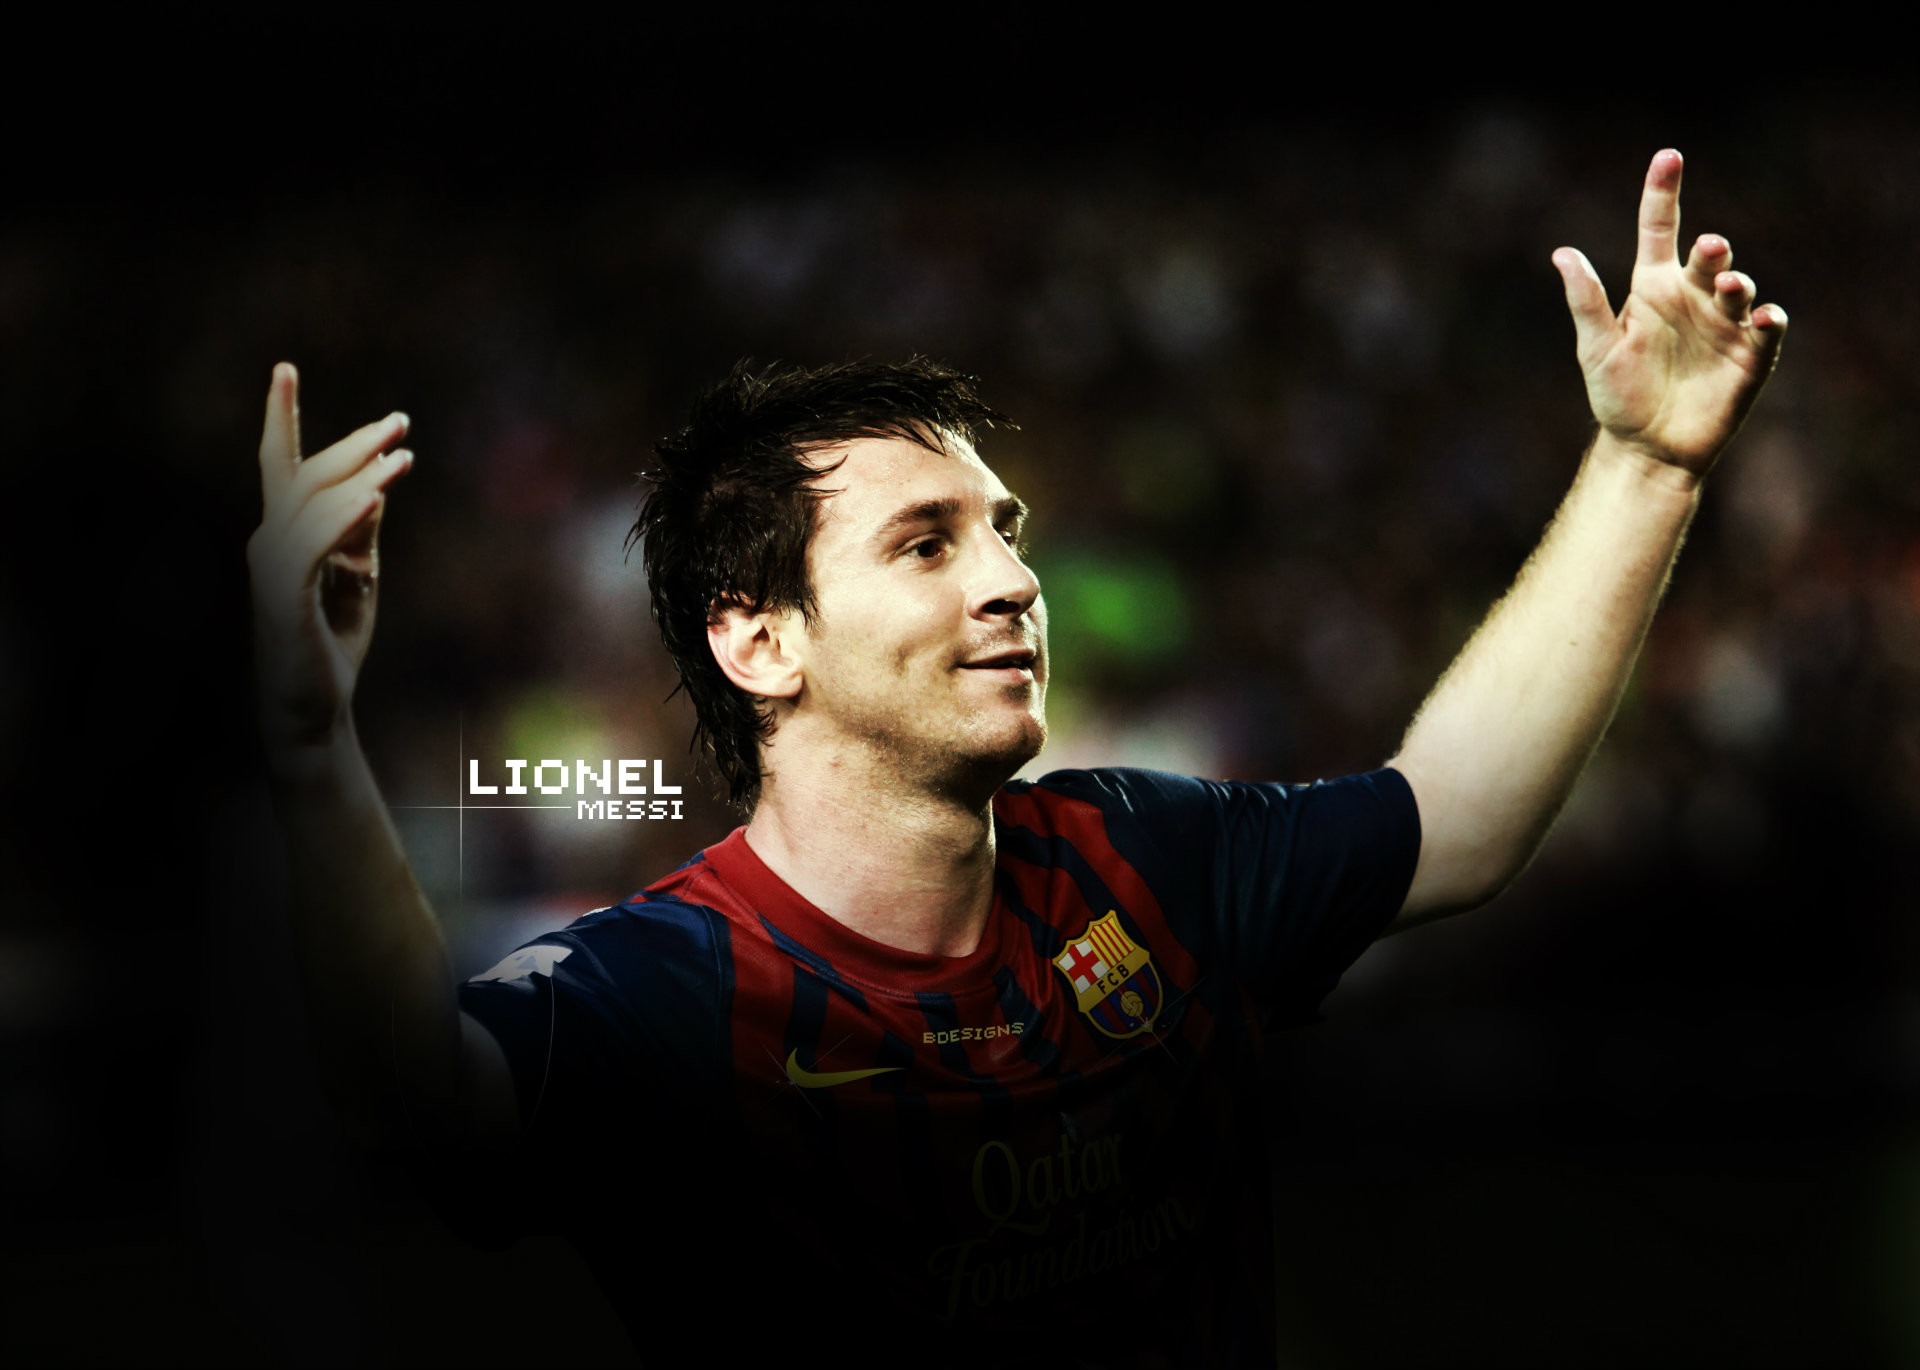 1920x1370 Lionel Messi p HD Wallpapers Wallpaper Lionel Messi Hd Wallpapers Wallpapers )